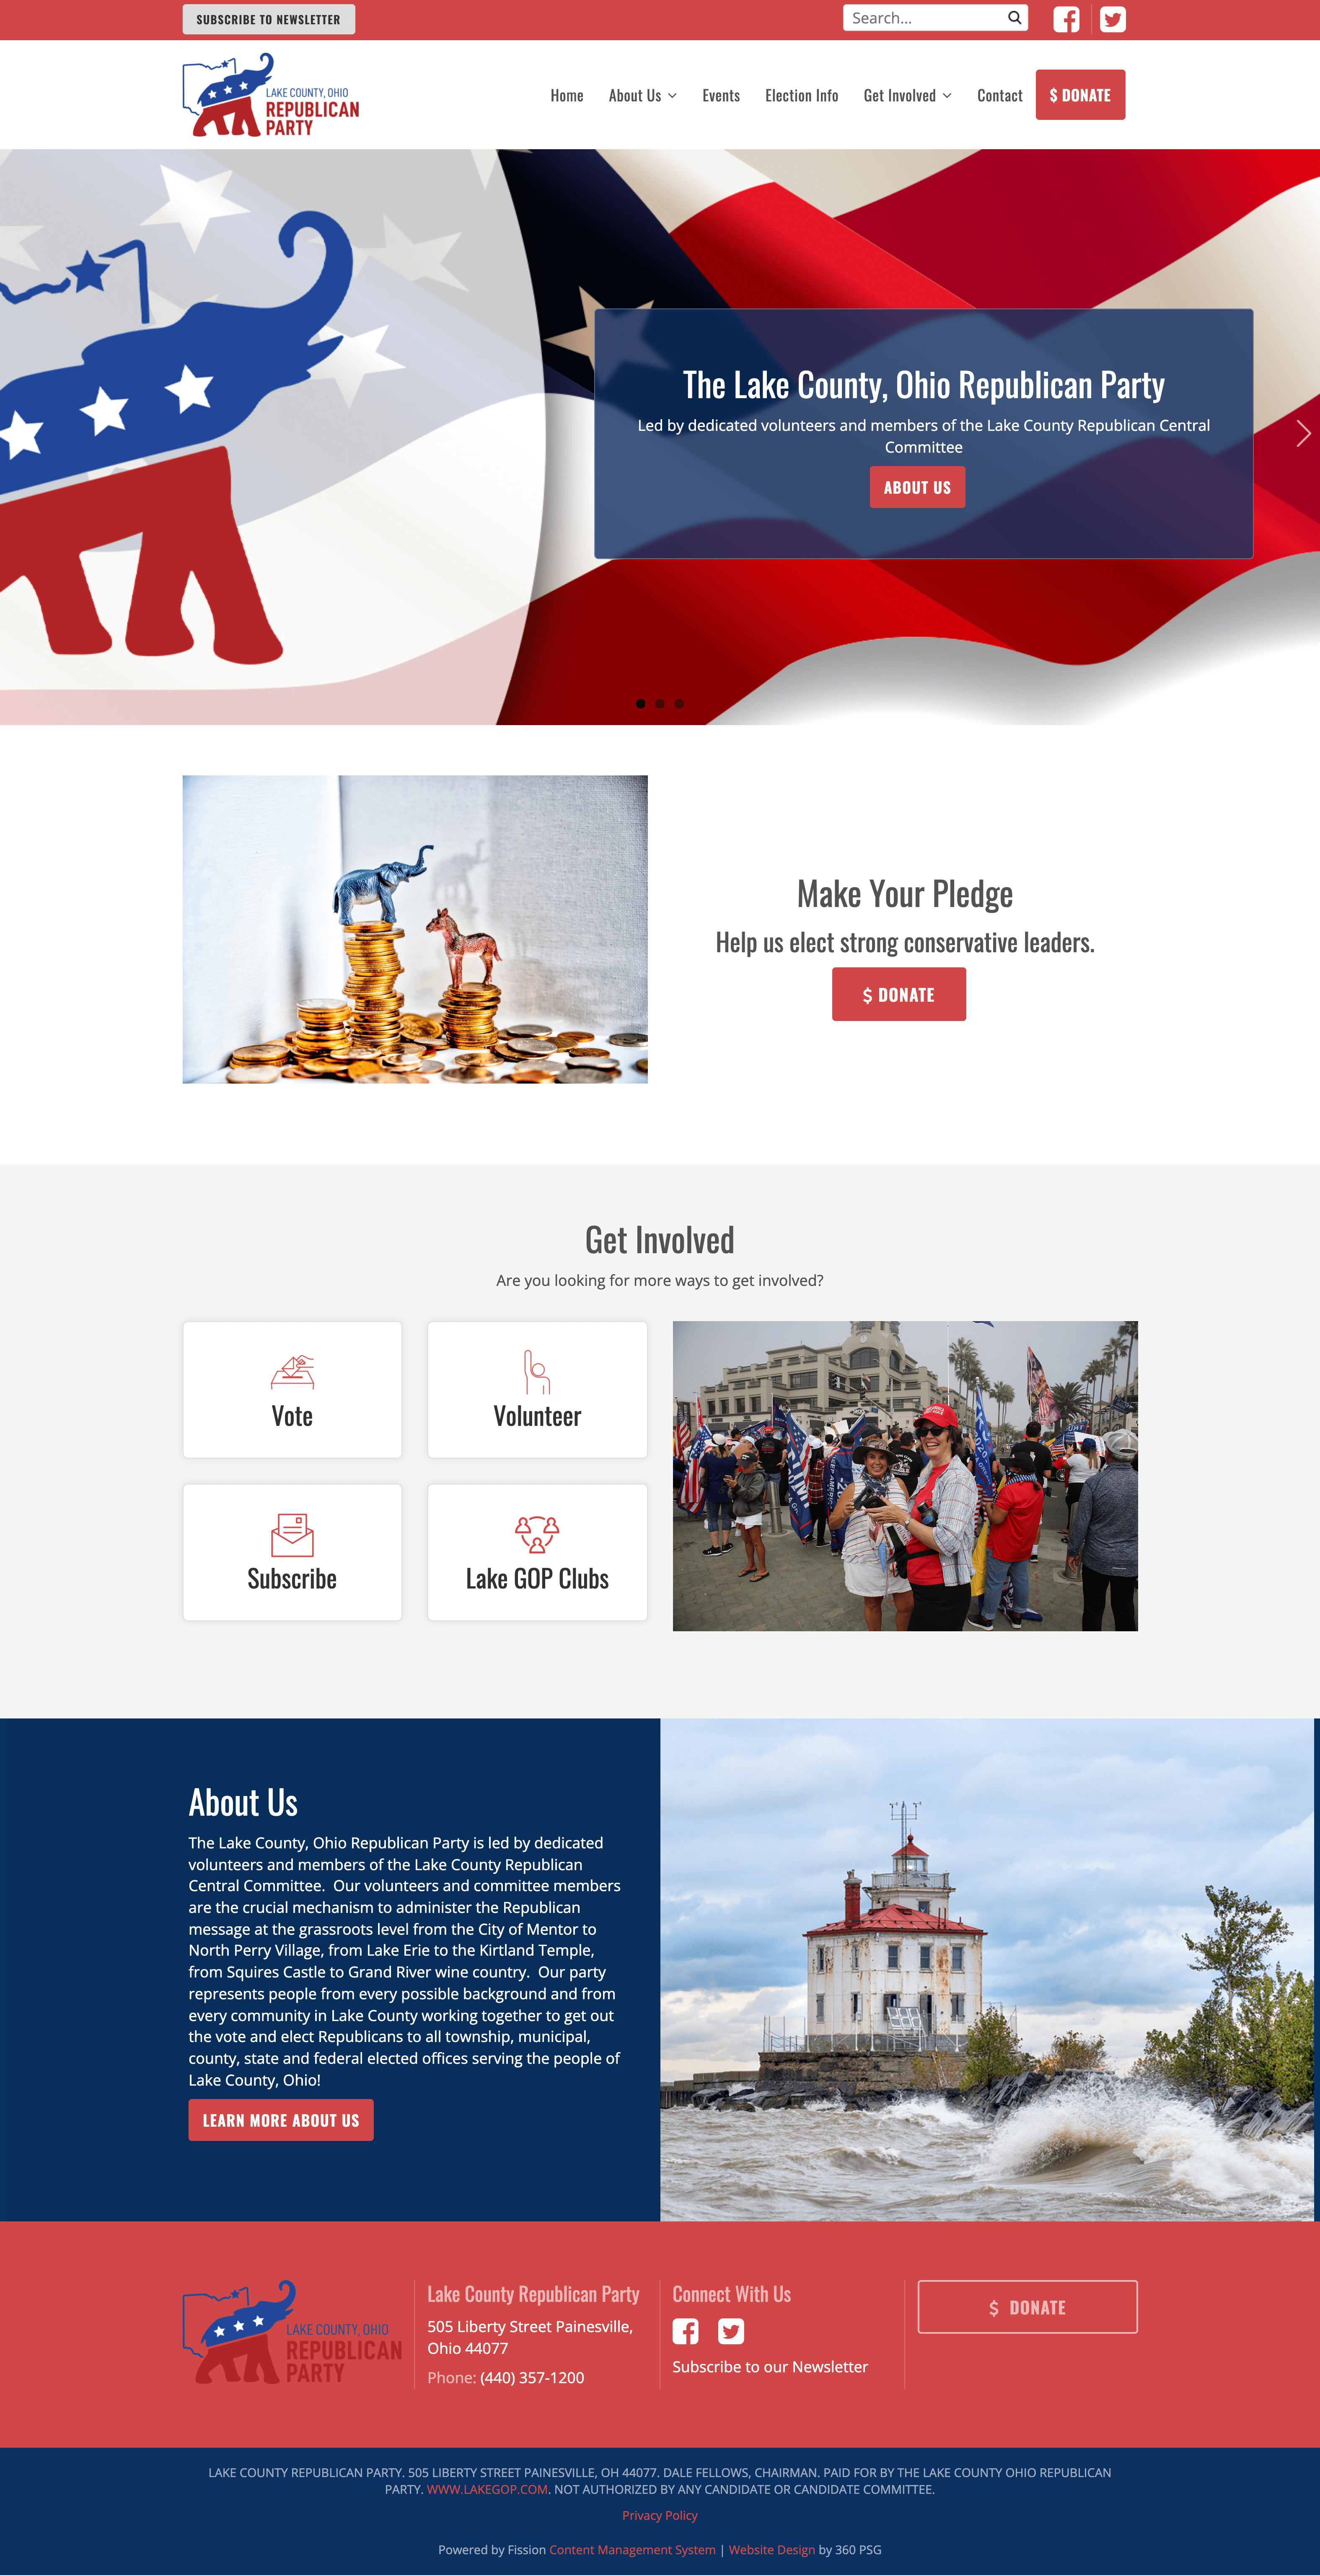 The Lake County, Ohio Republican Party Website - Desktop